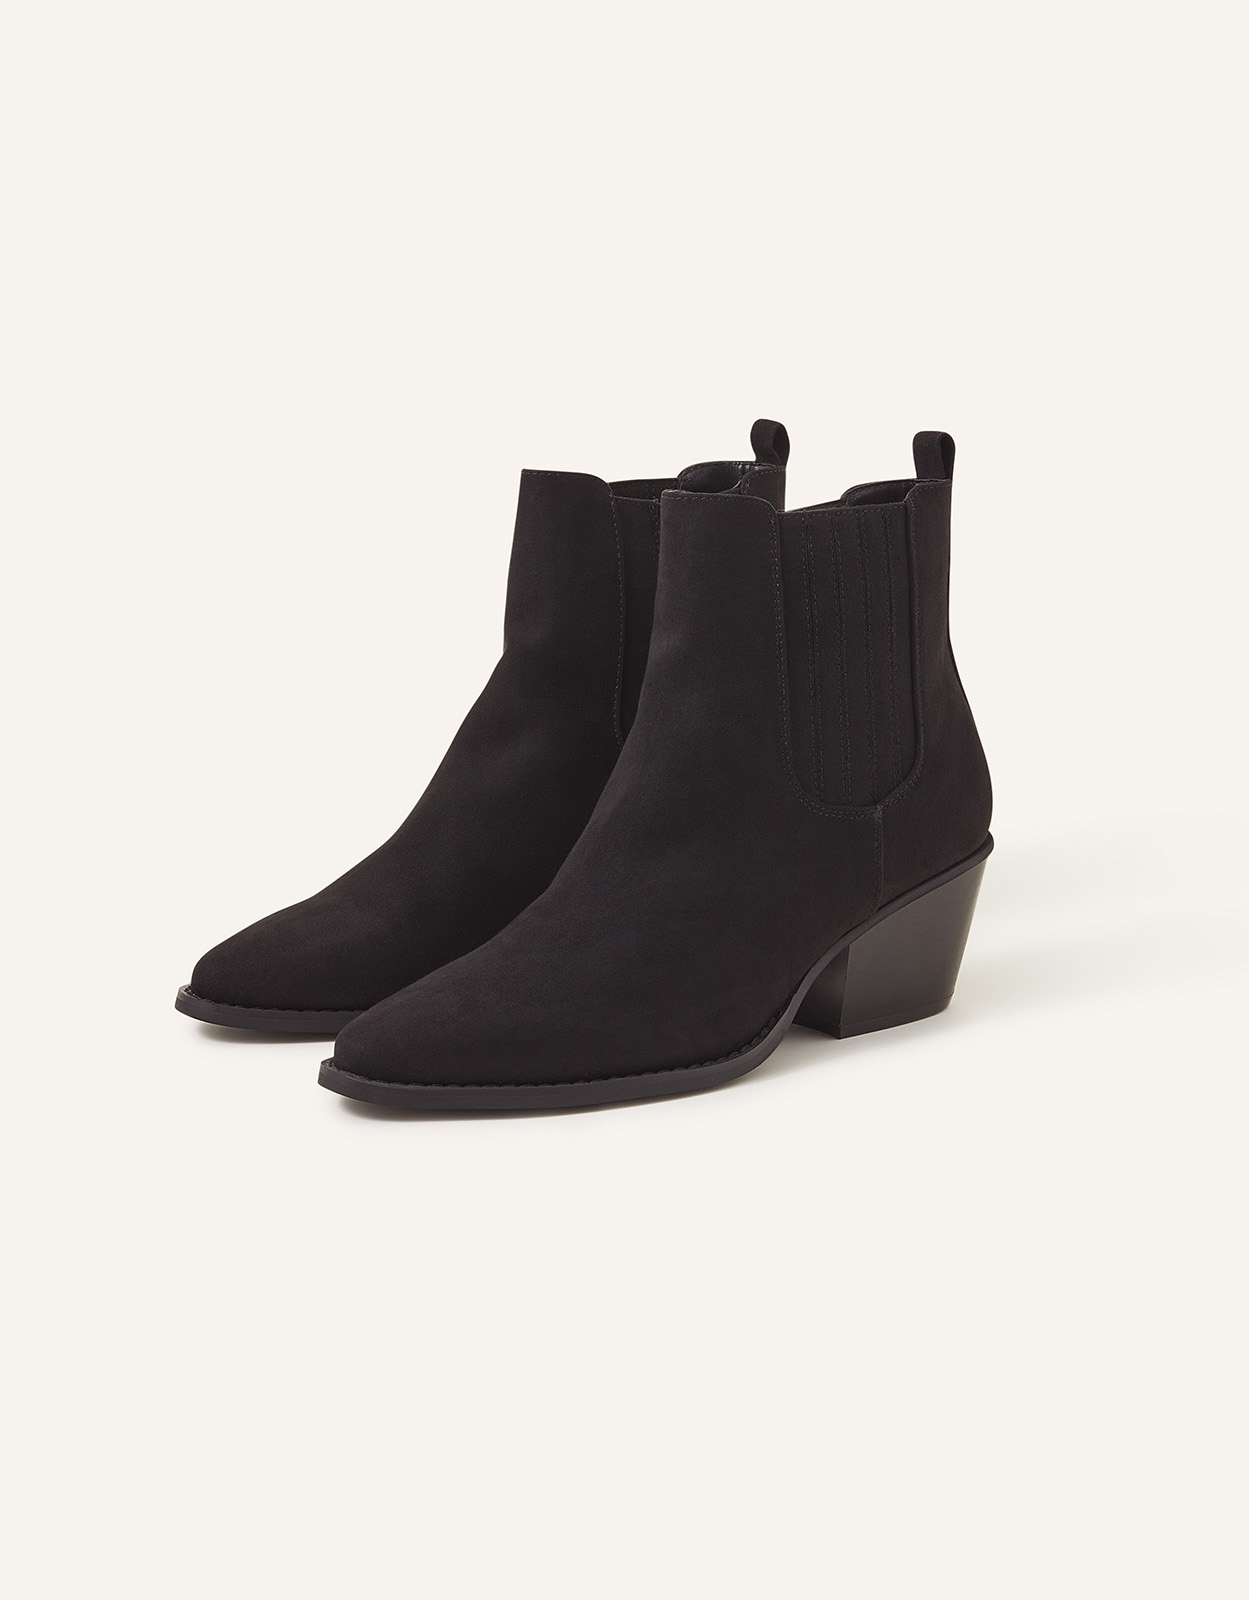 Accessorize Women's Western Boots Black, Size: 38